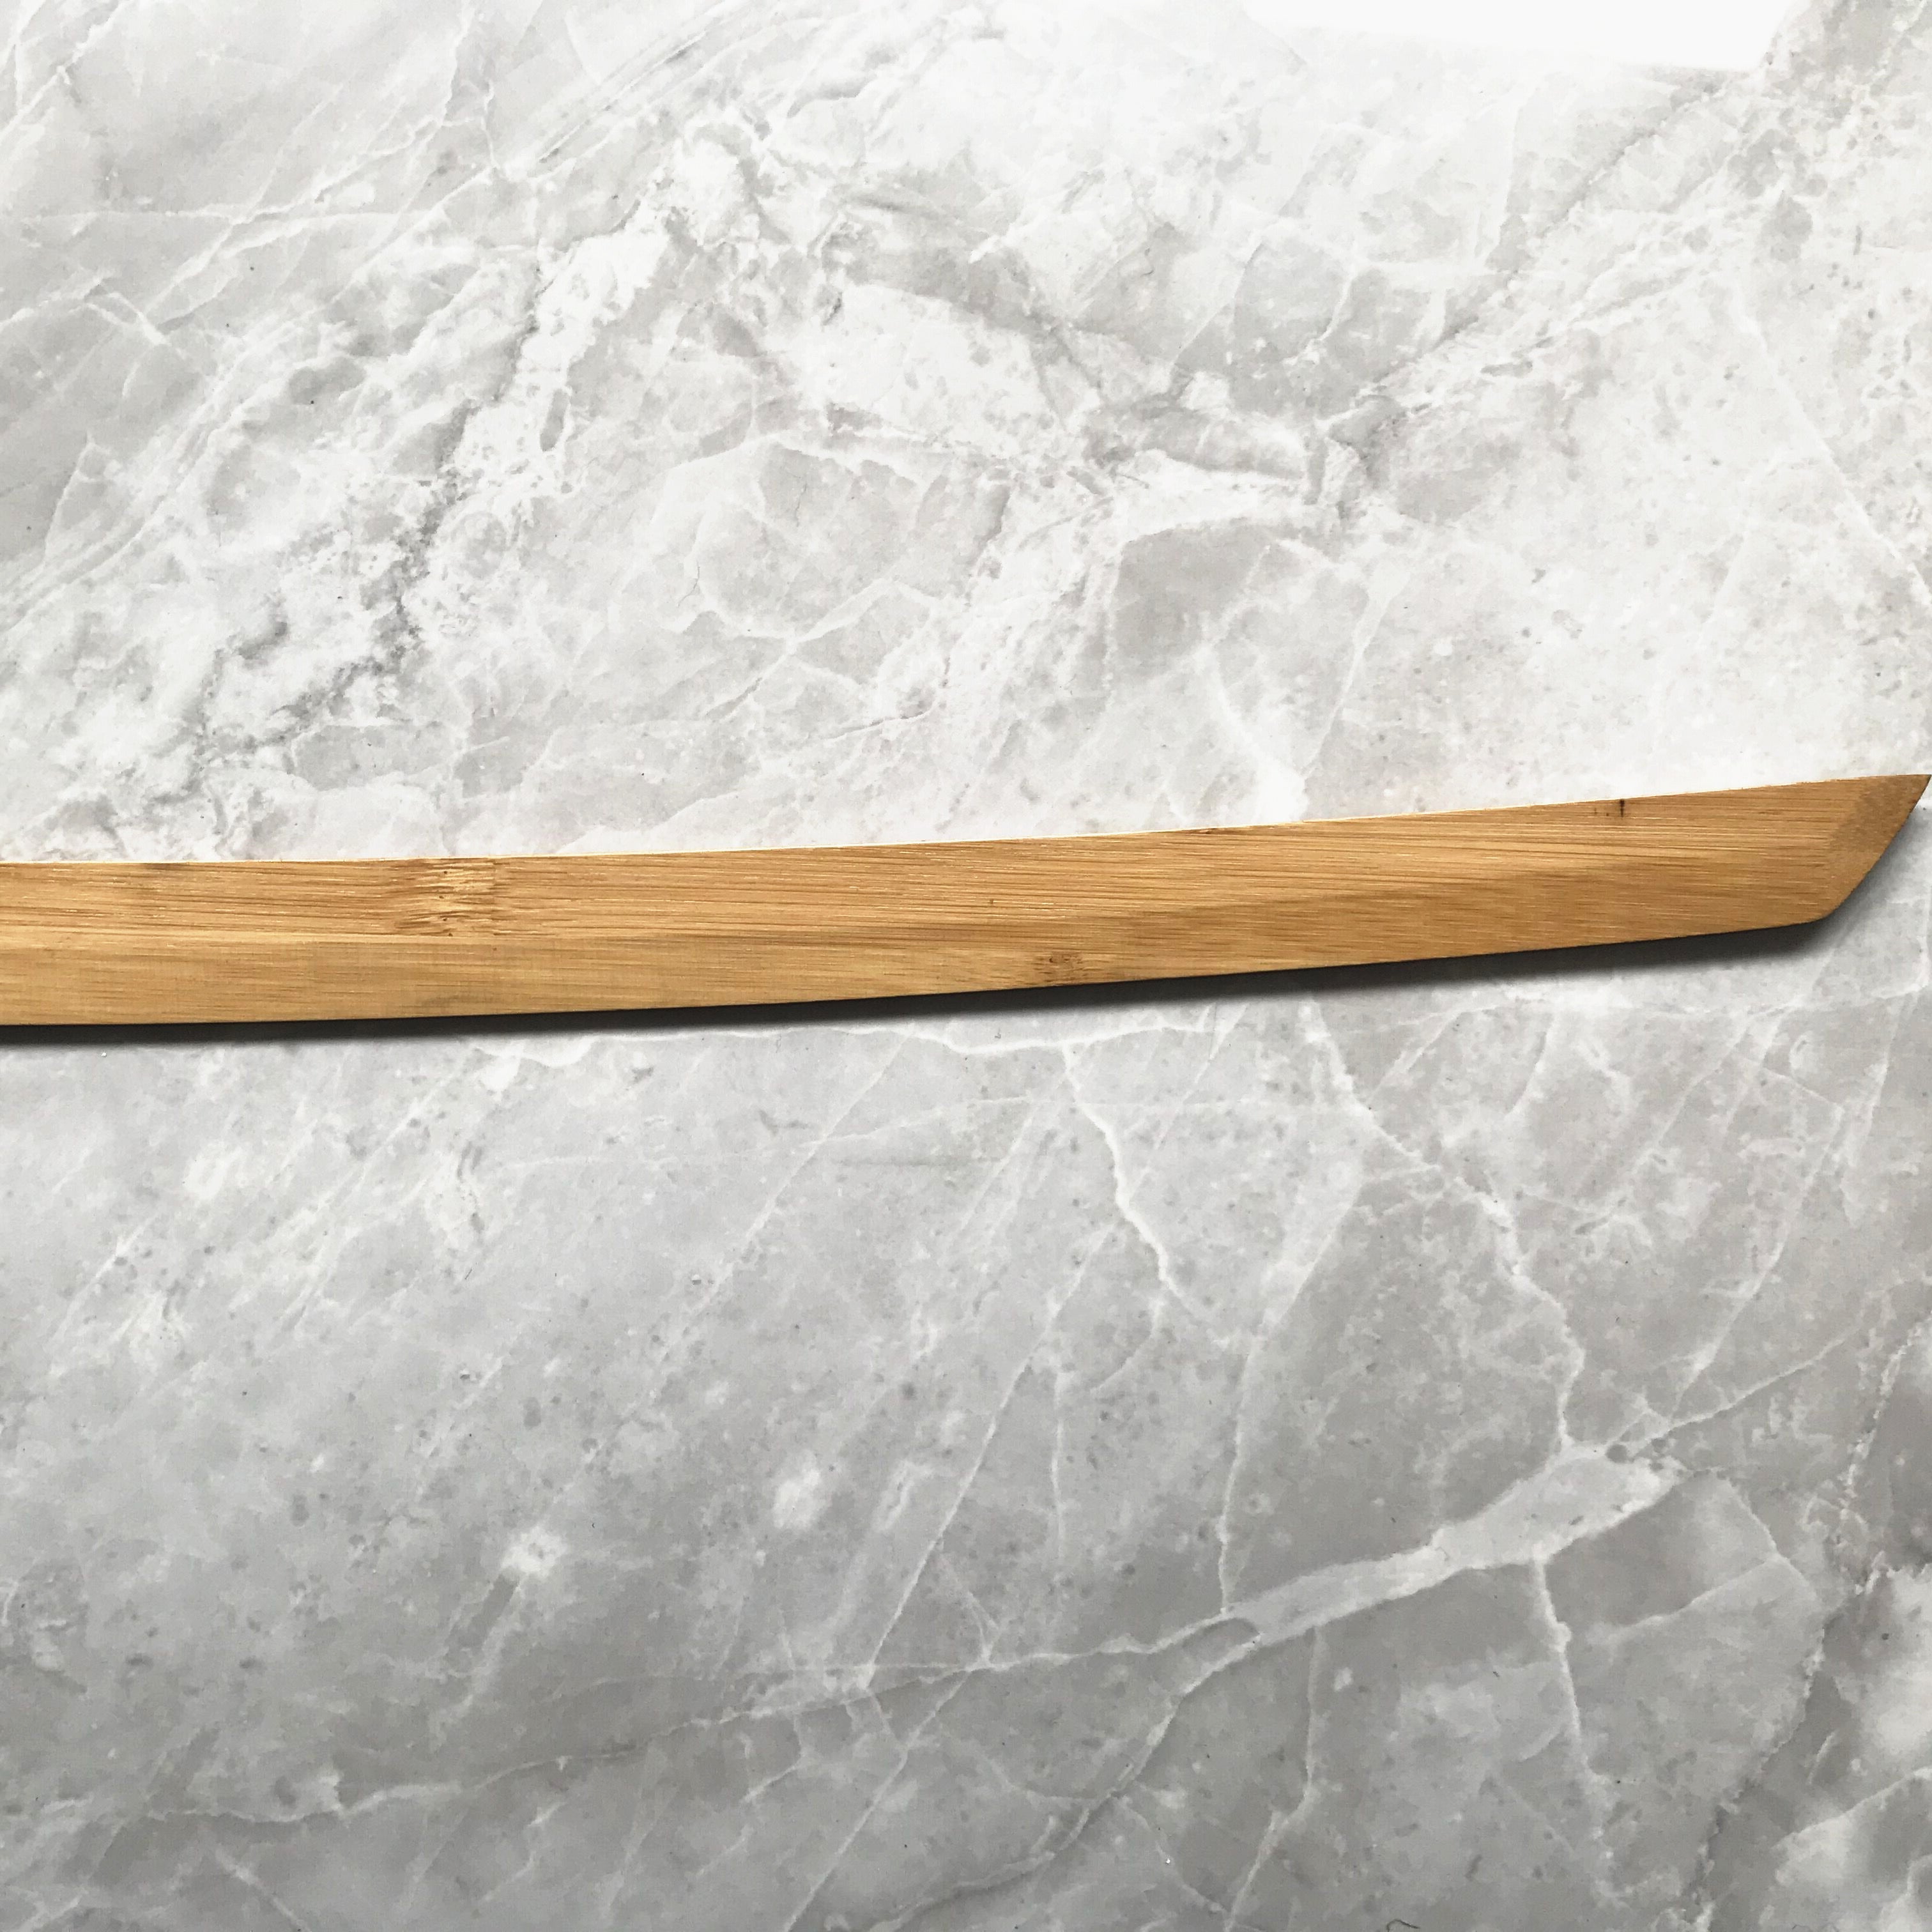 Miyamoto Musashi Katana,Wooden Katana,Japanese Samurai Sword,Handmade Wooden Sword,Bamboo Blade